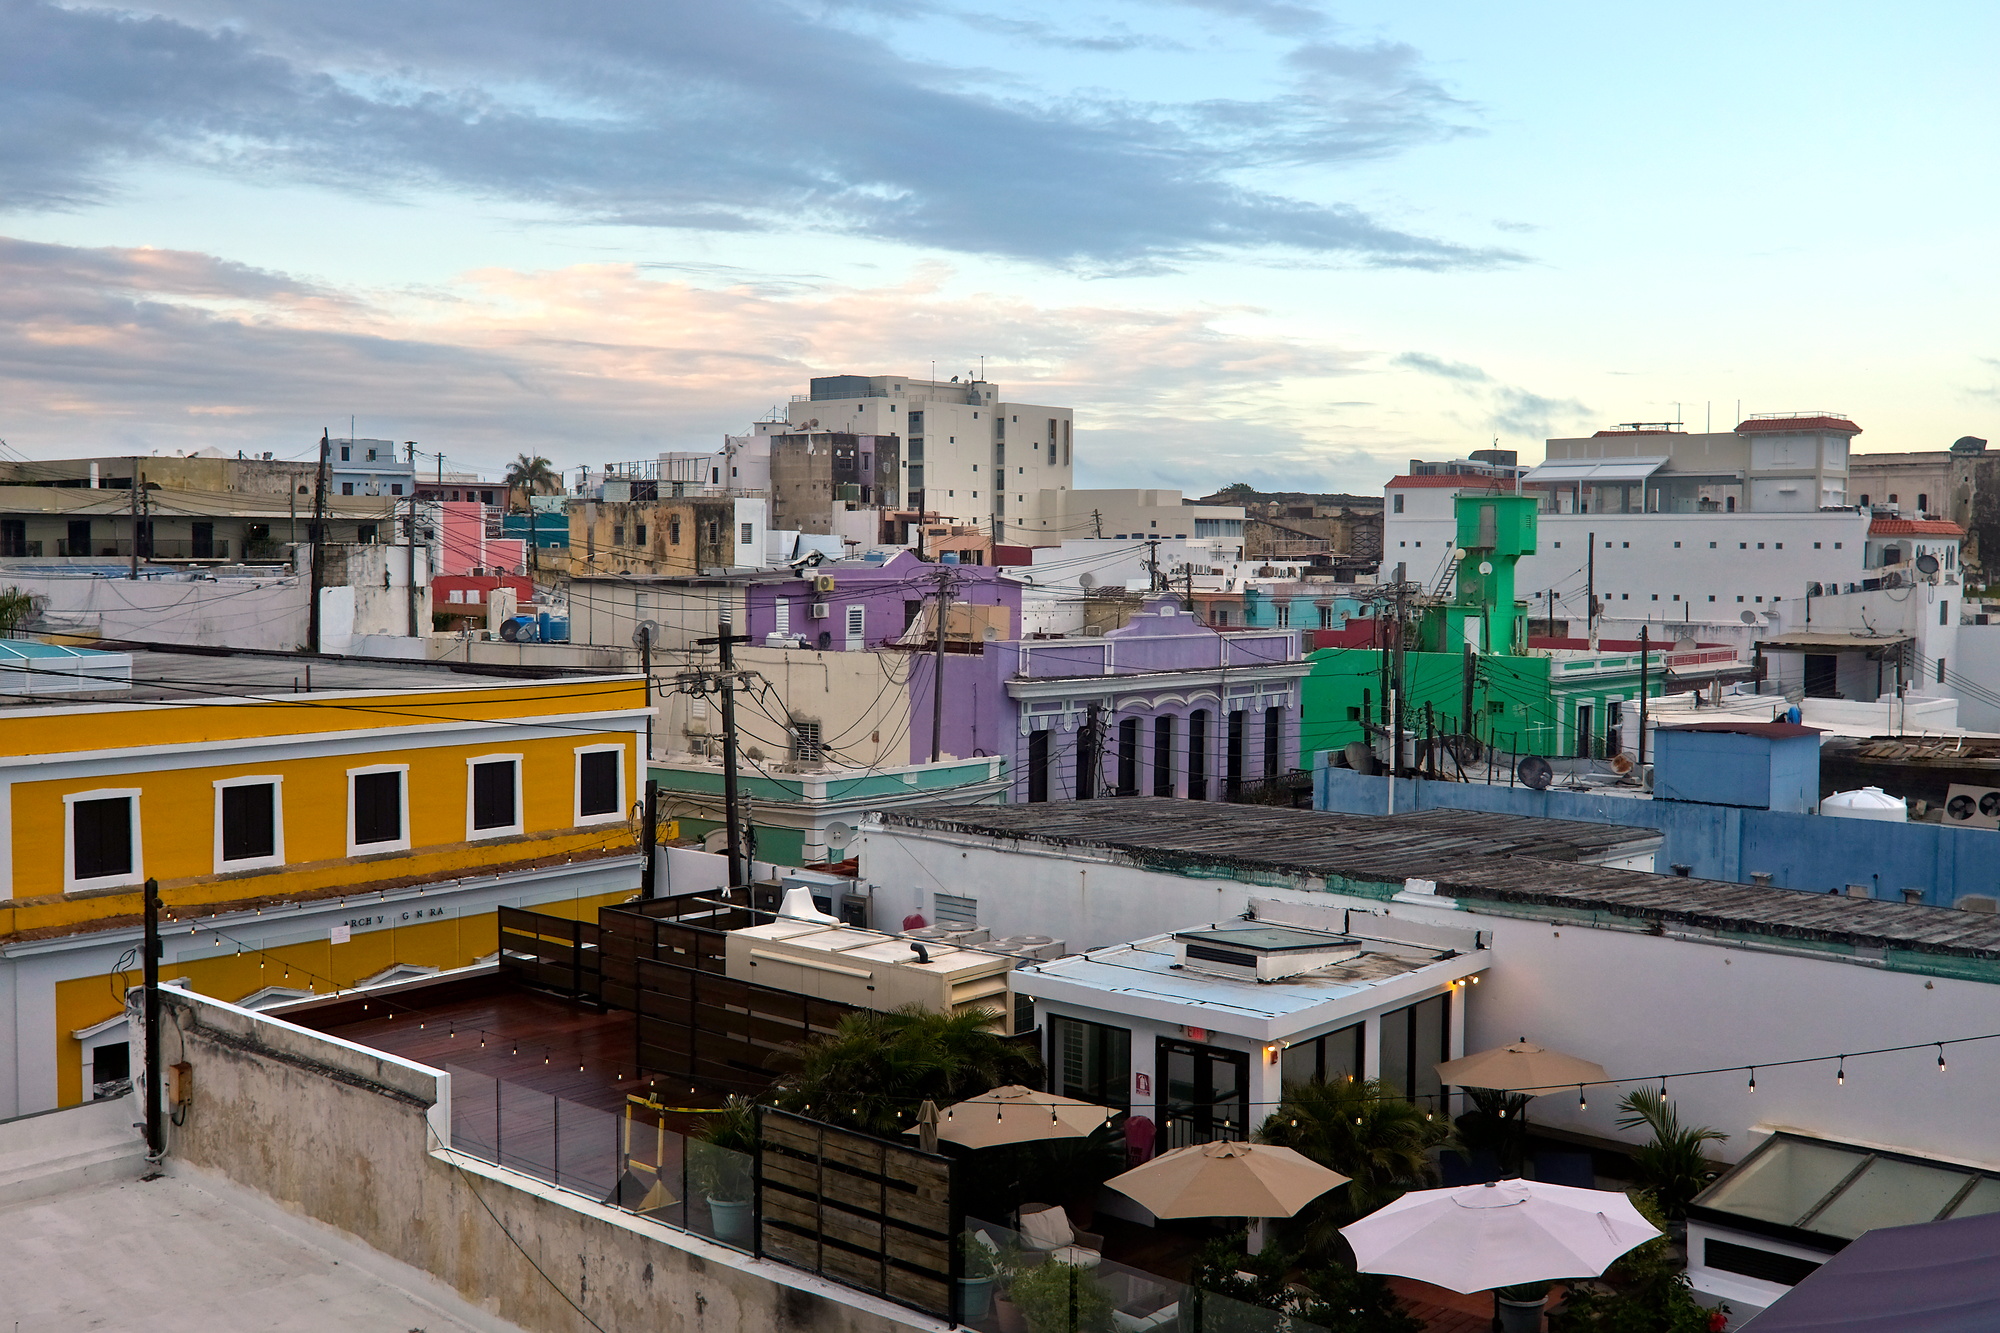 View of Old San Juan from El Colonial